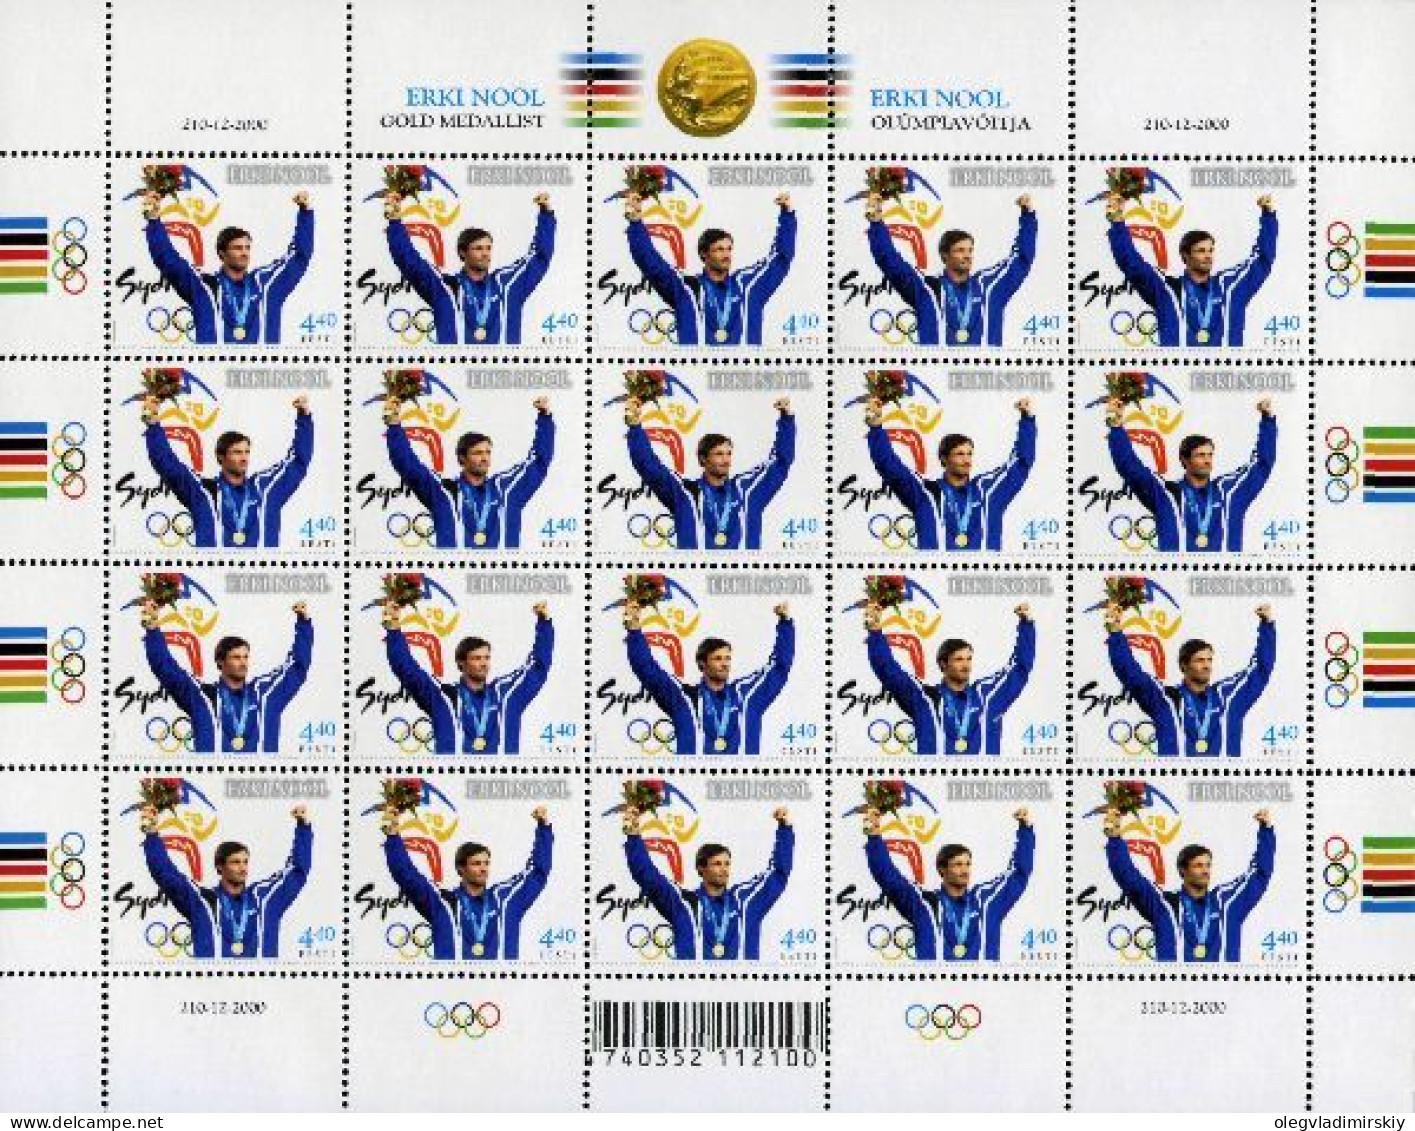 Estonia Estland Estonie 2001 Olympic Champion Erki Nool Sydney Summer Olympics Sheetlet MNH - Sommer 2000: Sydney - Paralympics